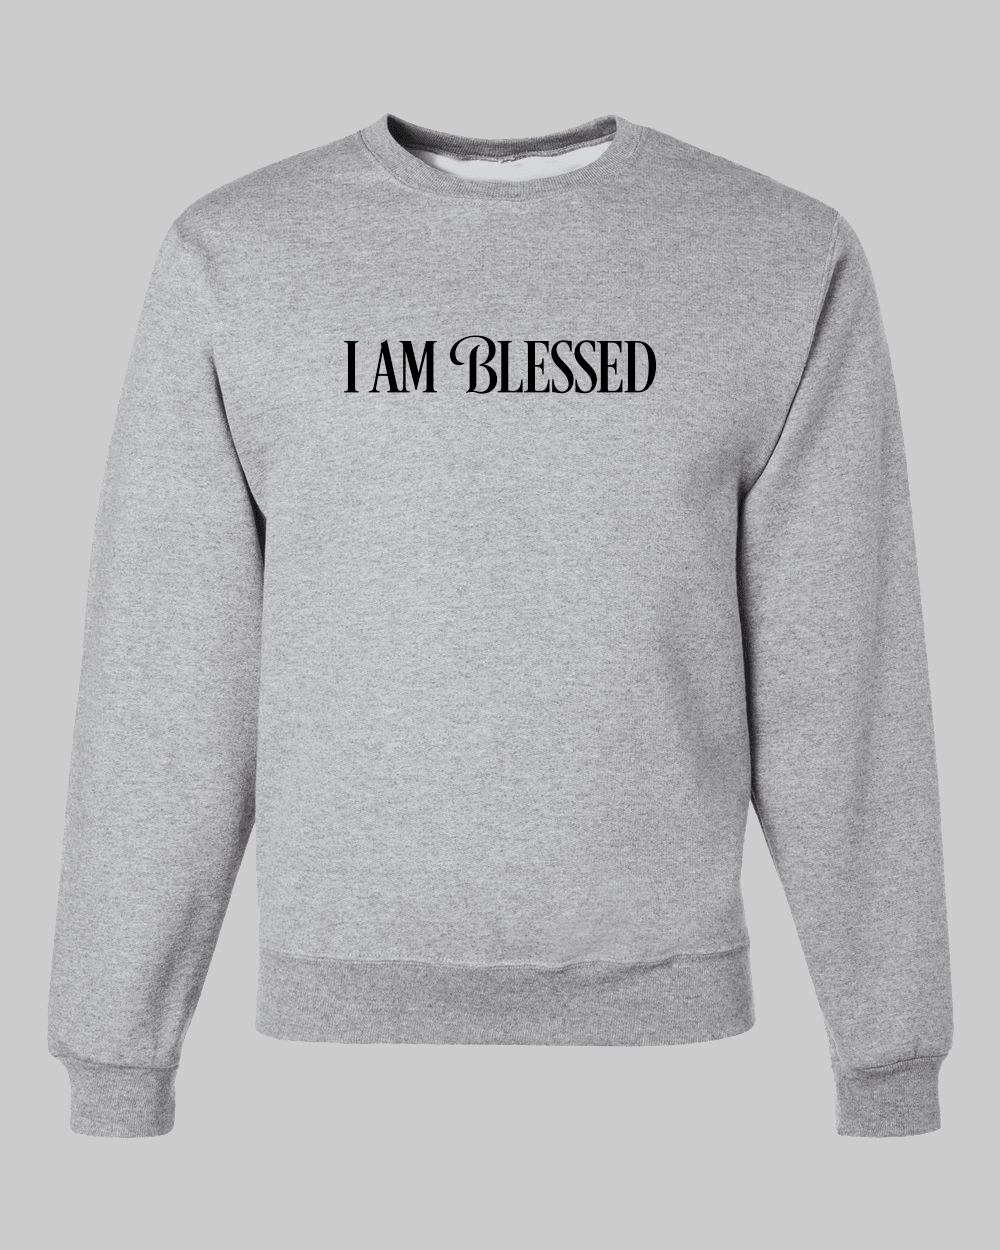 I am Blessed Unisex Grey Fleece Sweatshirt - Mercy Plus Grace